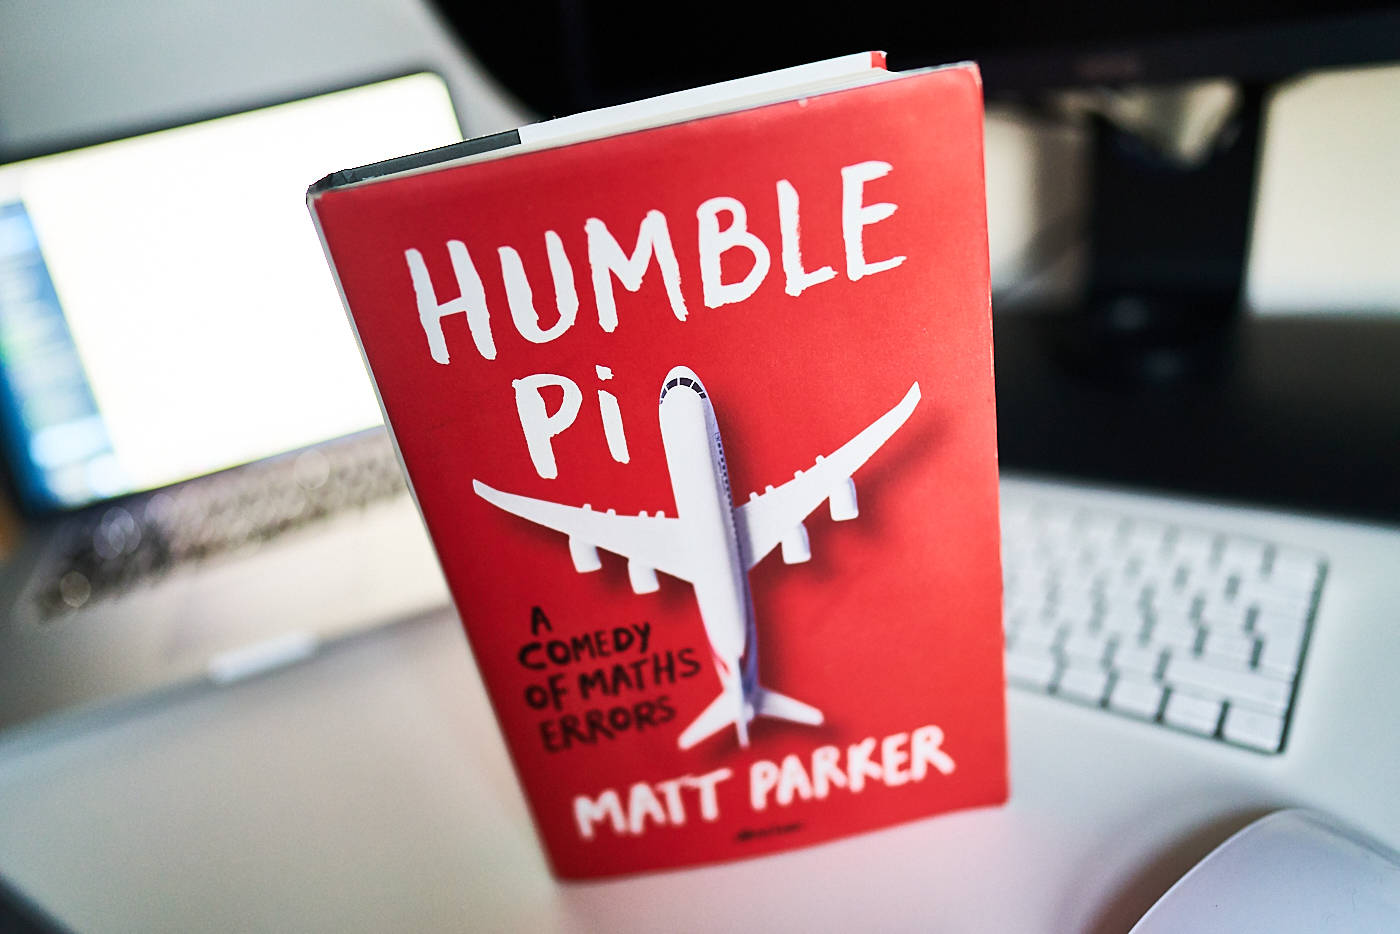 Humble Pi a comedy of maths errors By Parker Matt Book PDF